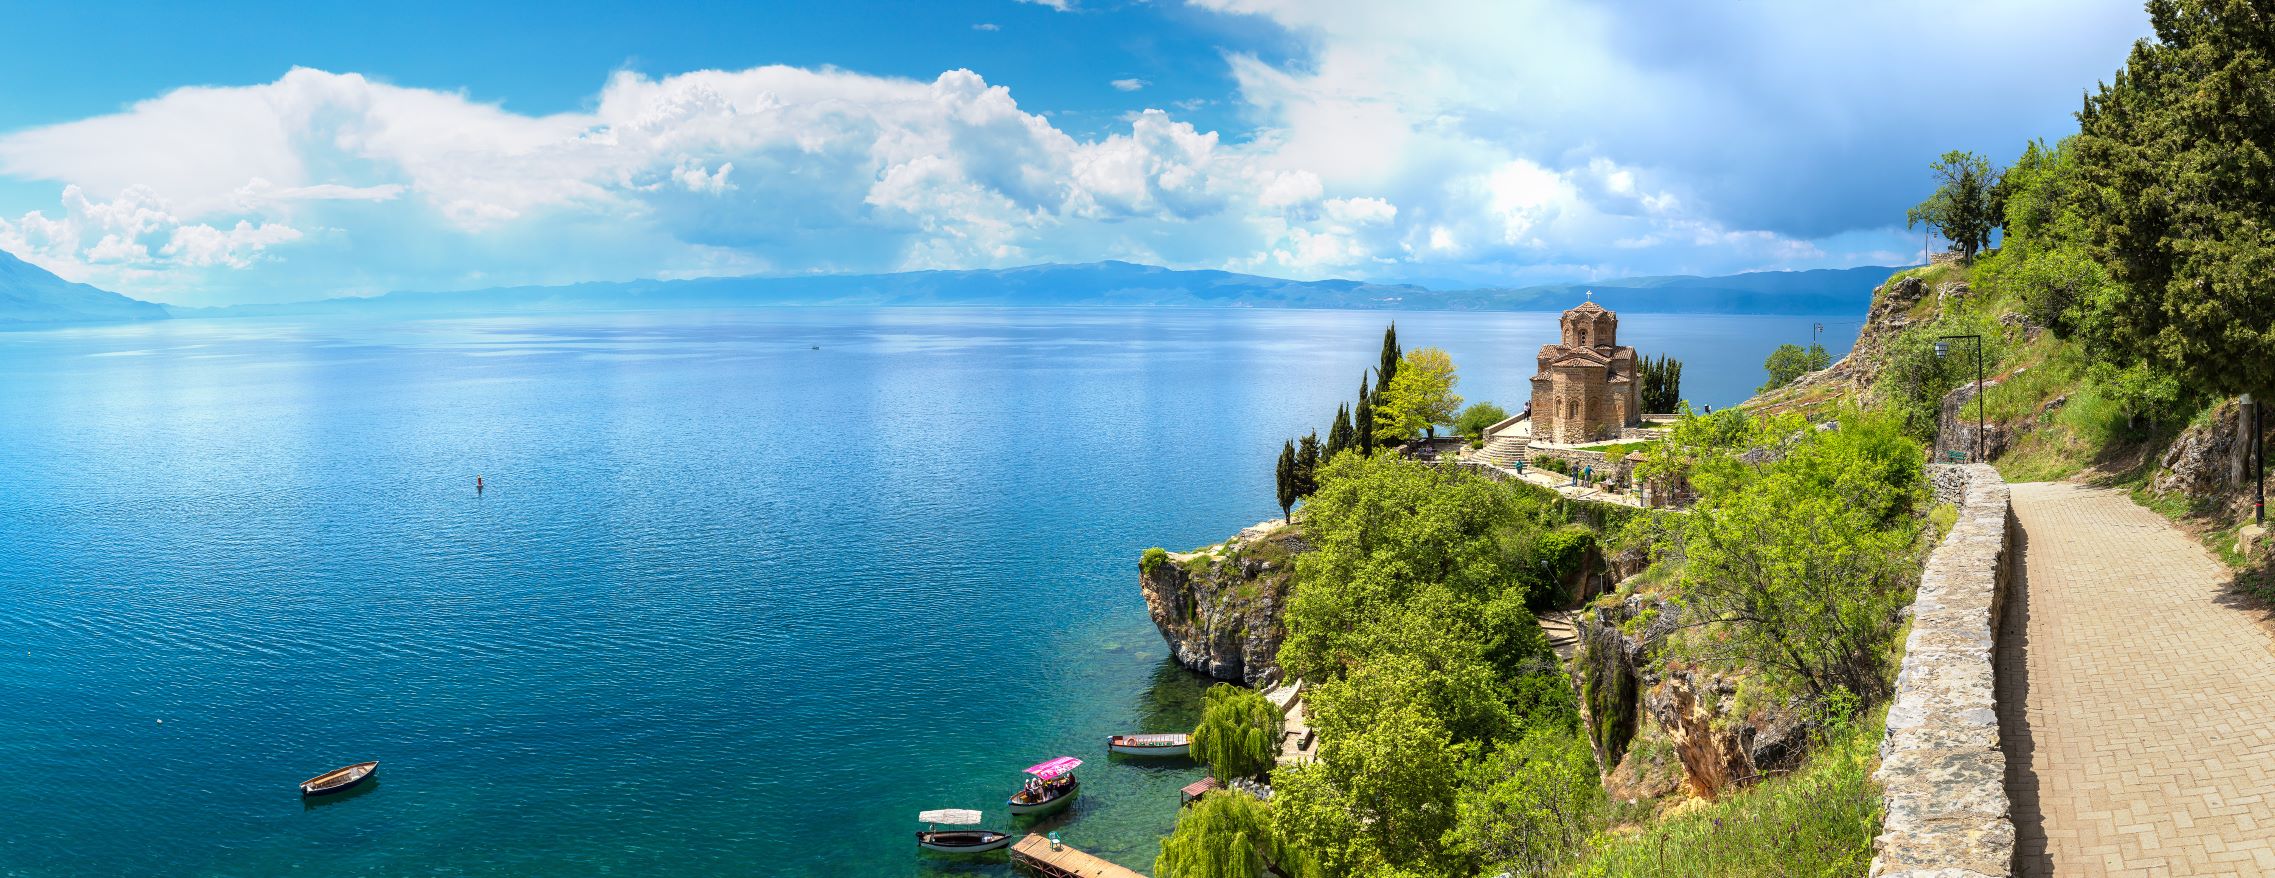 KNMtravel MC, North Macedonia, Ohrid lake